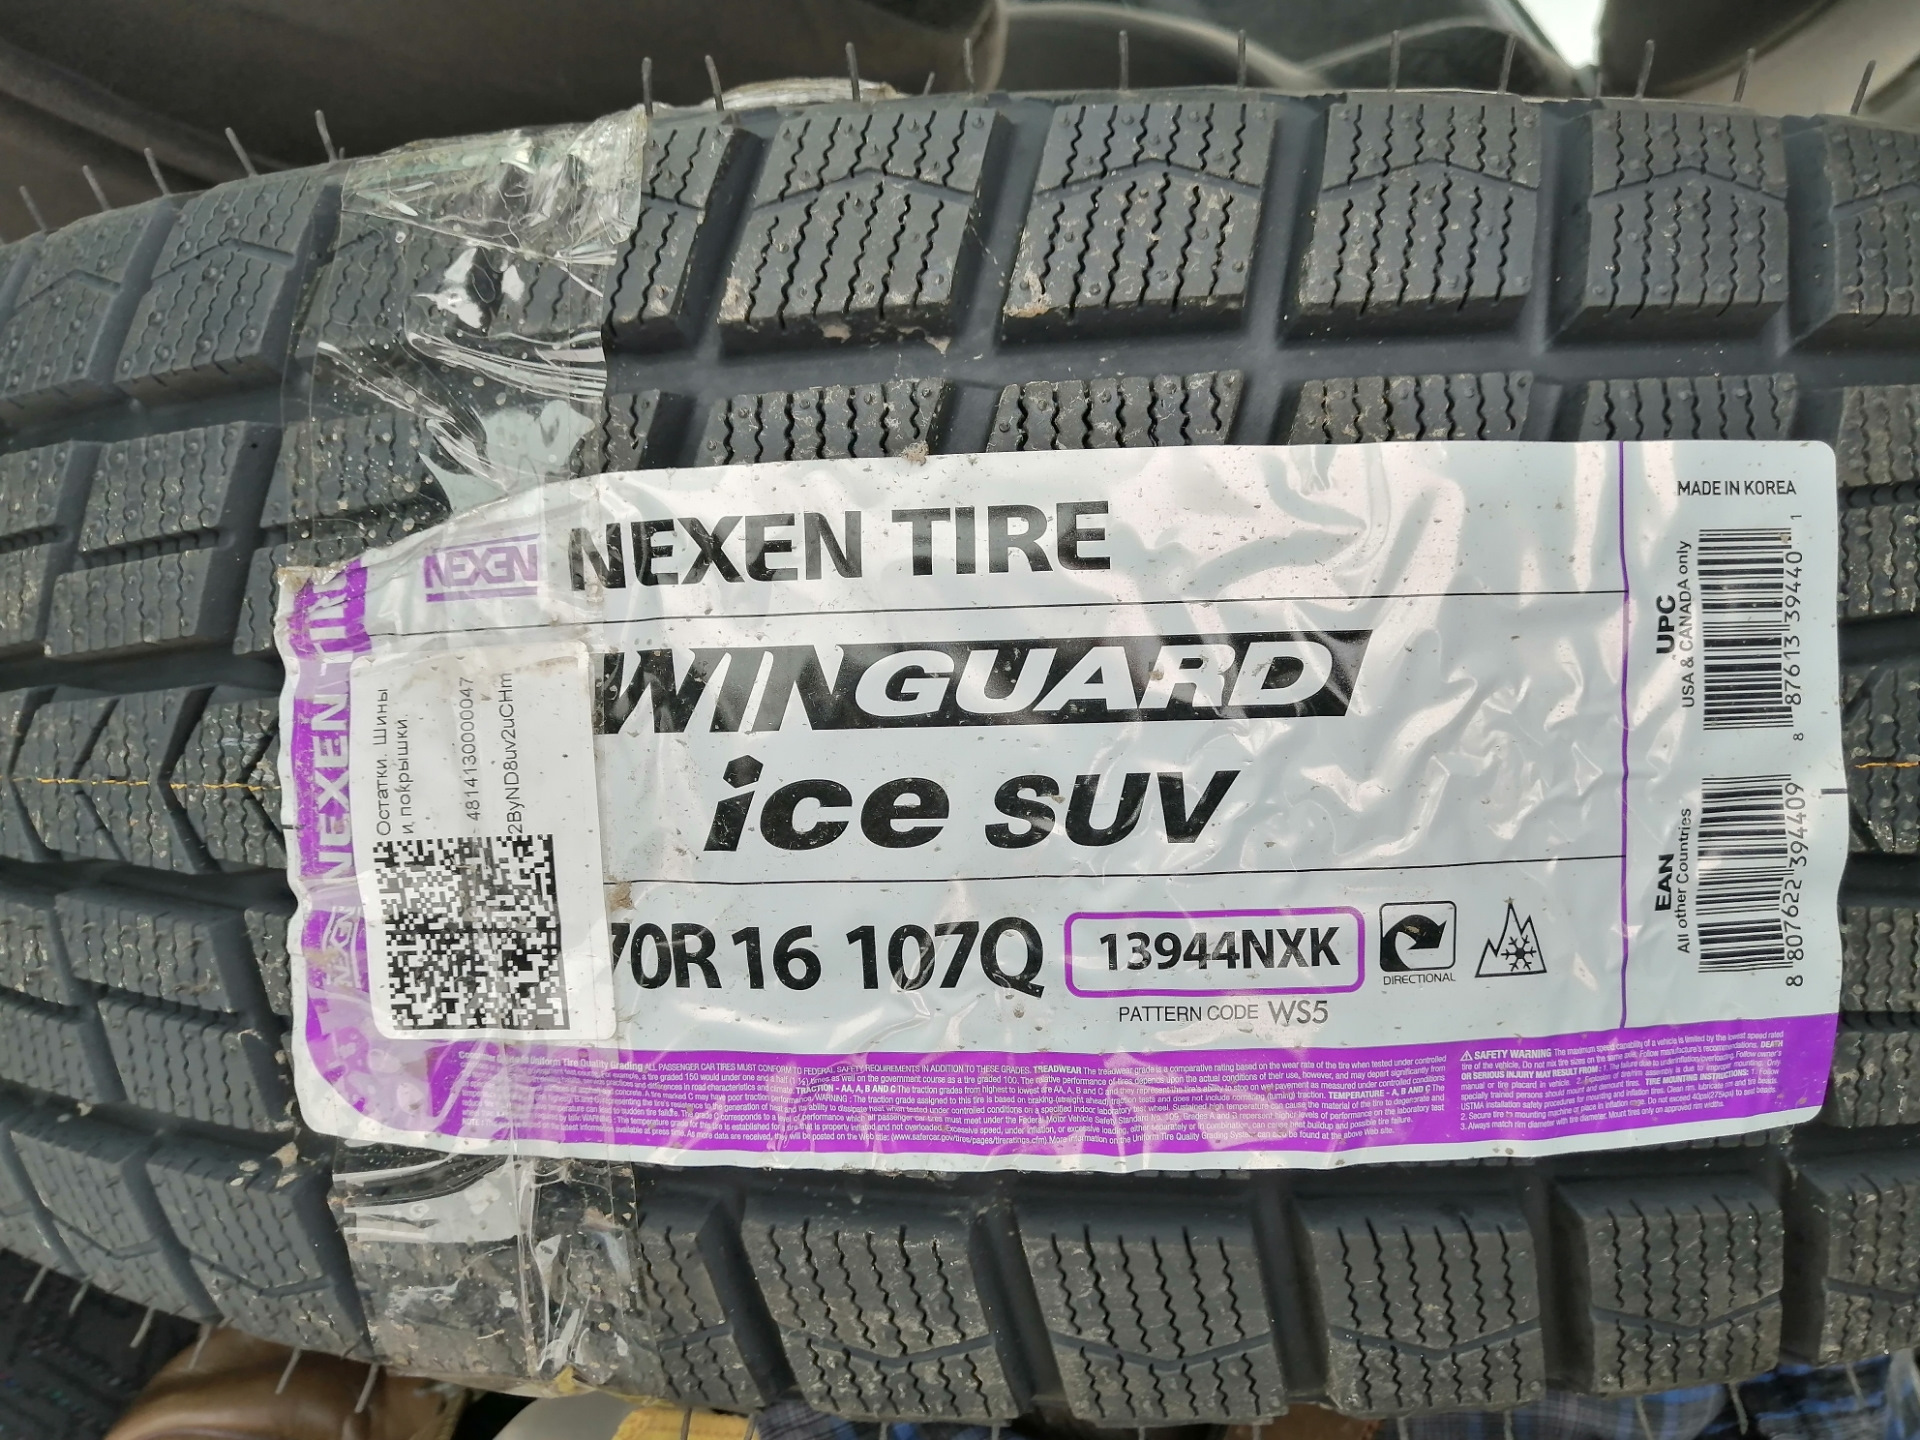 Nexen шины производство страна производитель. Nexen Ice SUV. Резина Nexen производитель Страна. Nexen Ice Guard. Нексен айс Row фото.